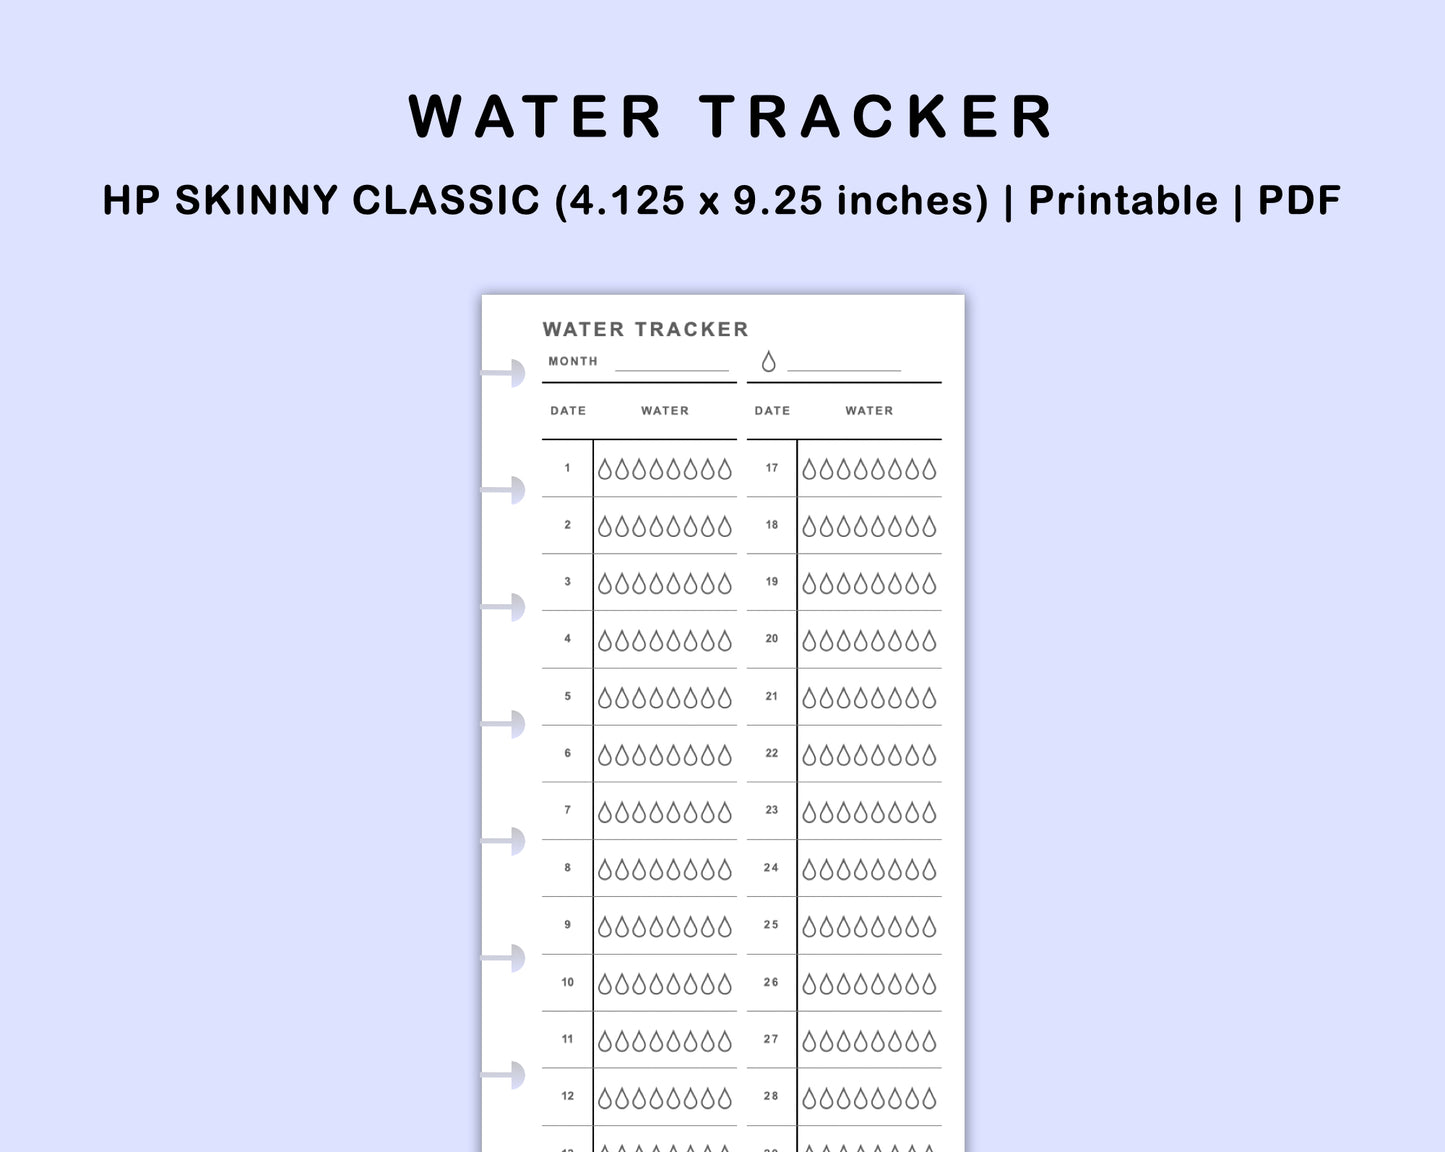 Skinny Classic HP Inserts - Water Tracker